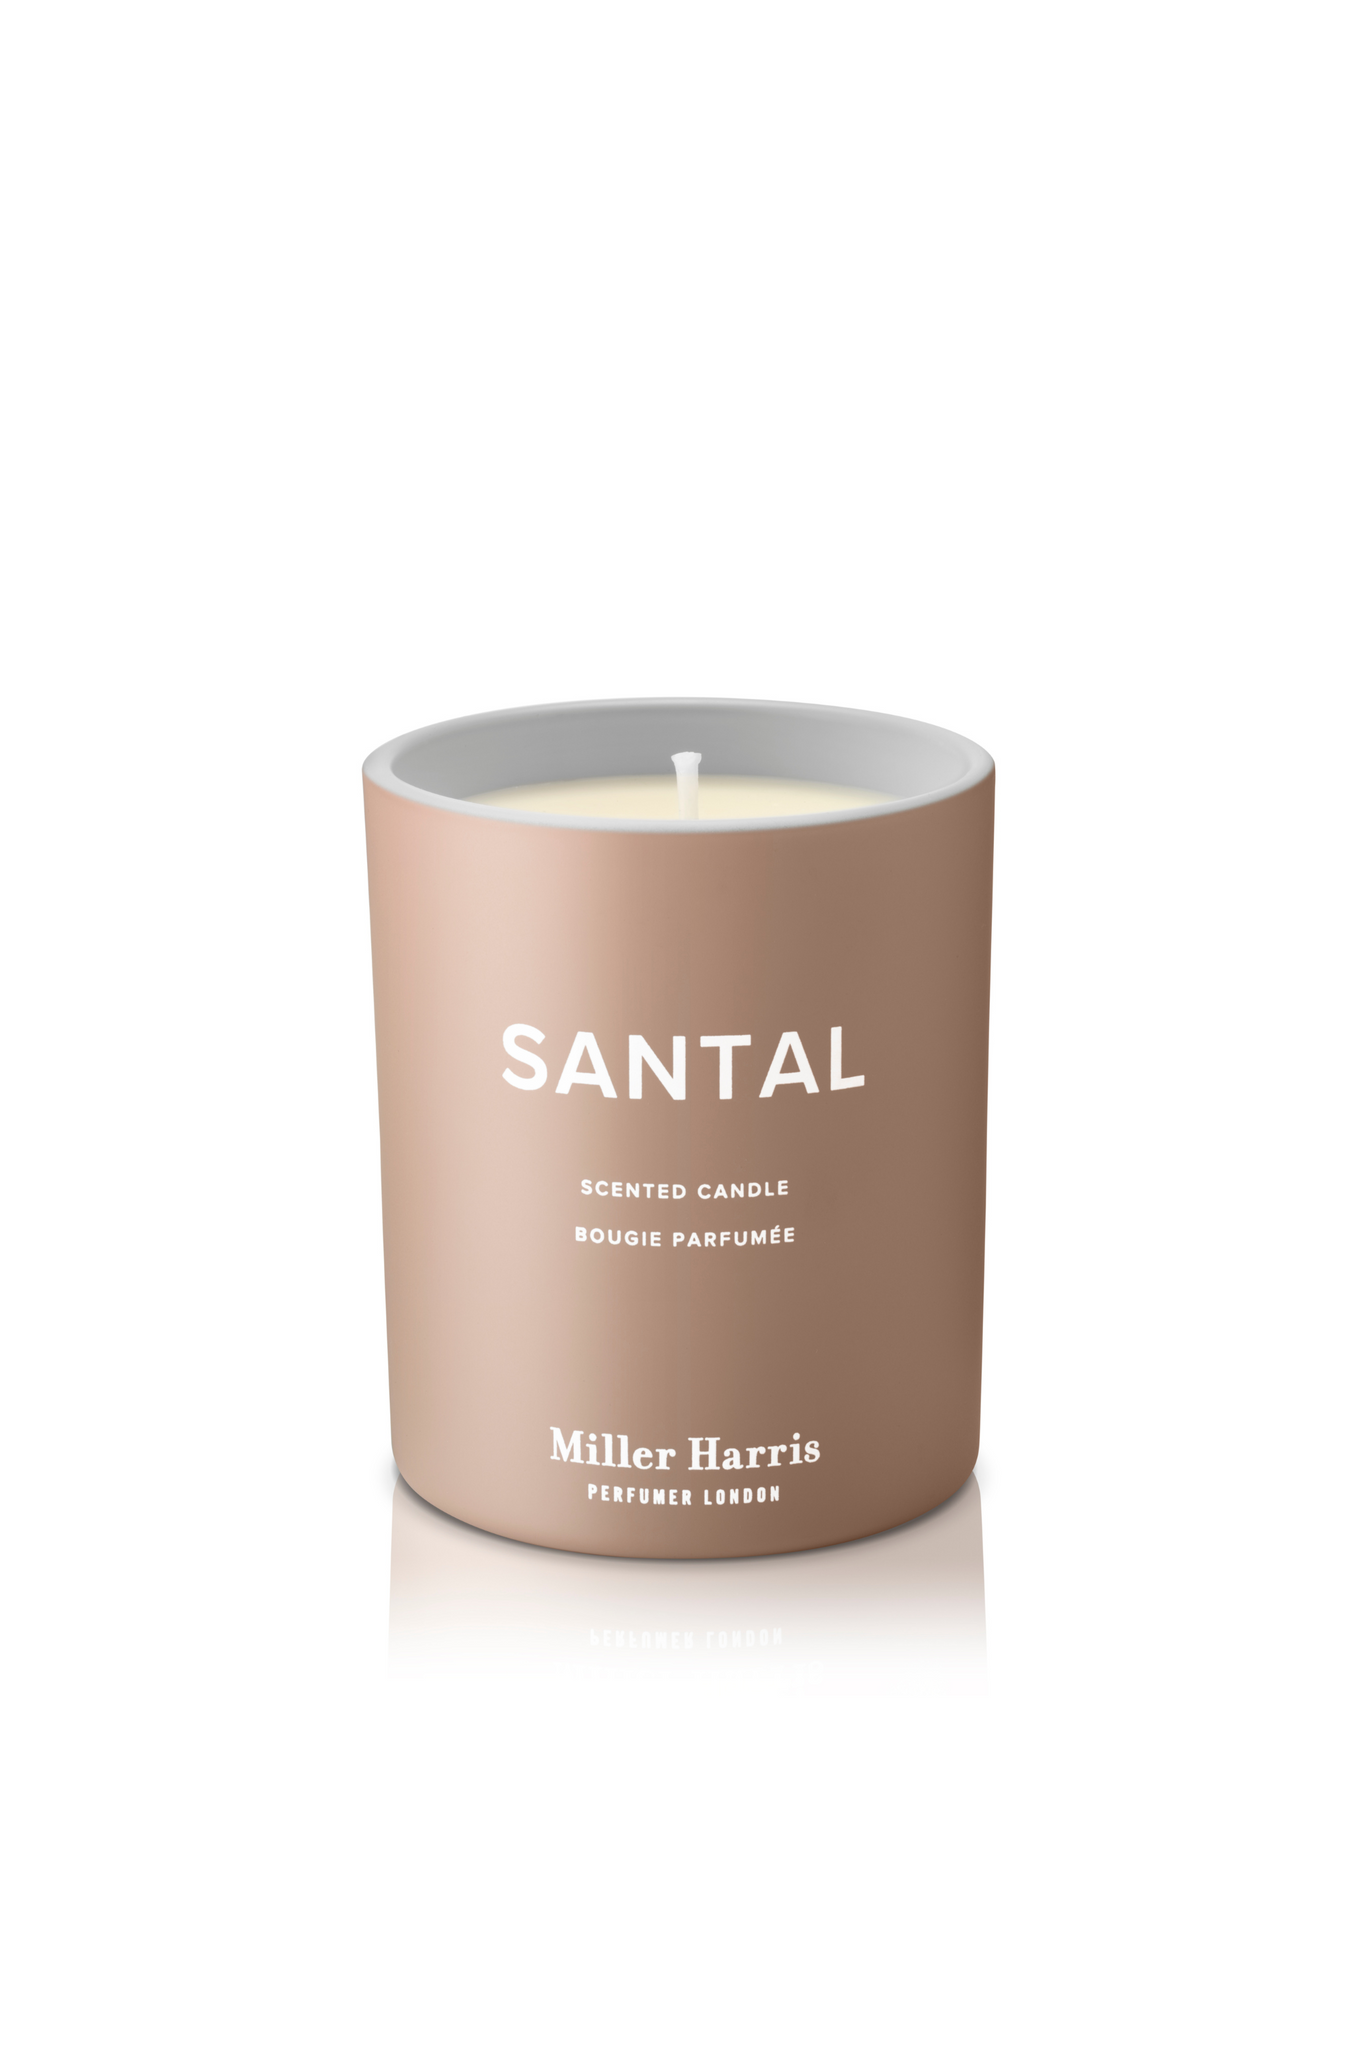 Miller Harris - Santal Candle